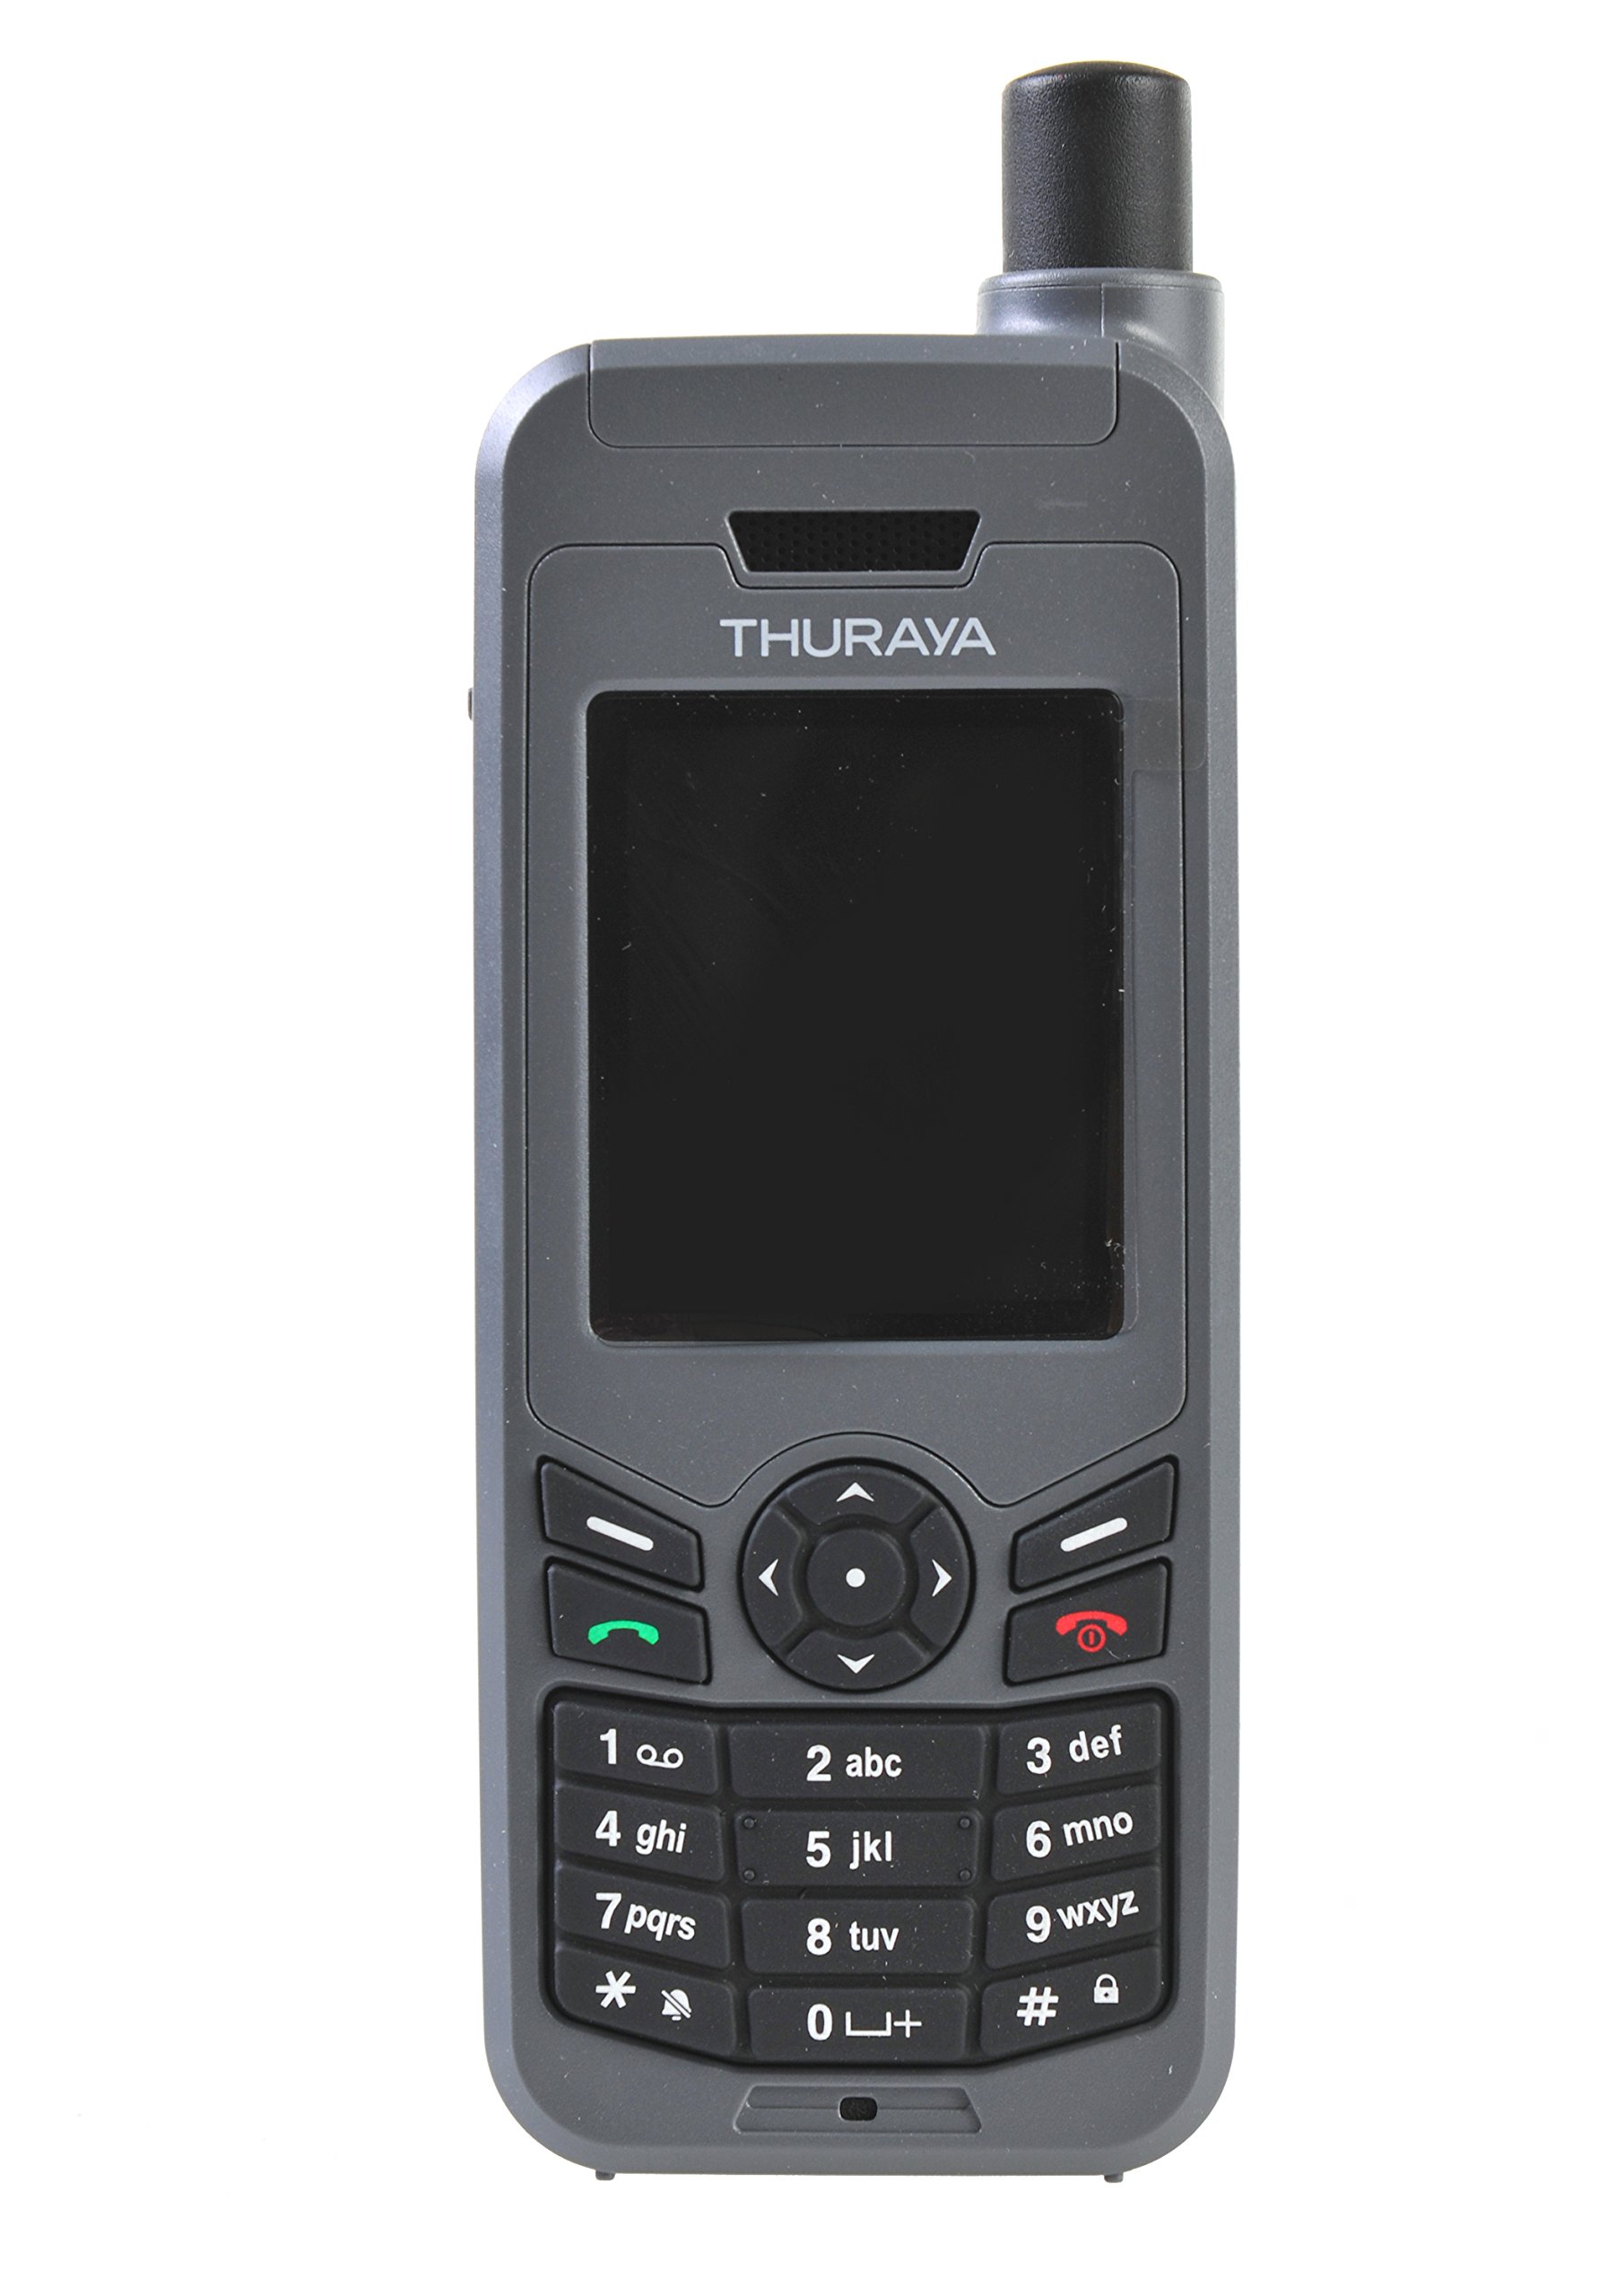 OSAT Thuraya XT-LITE Satellite Phone ONLY (No SIM Card or Airtime)